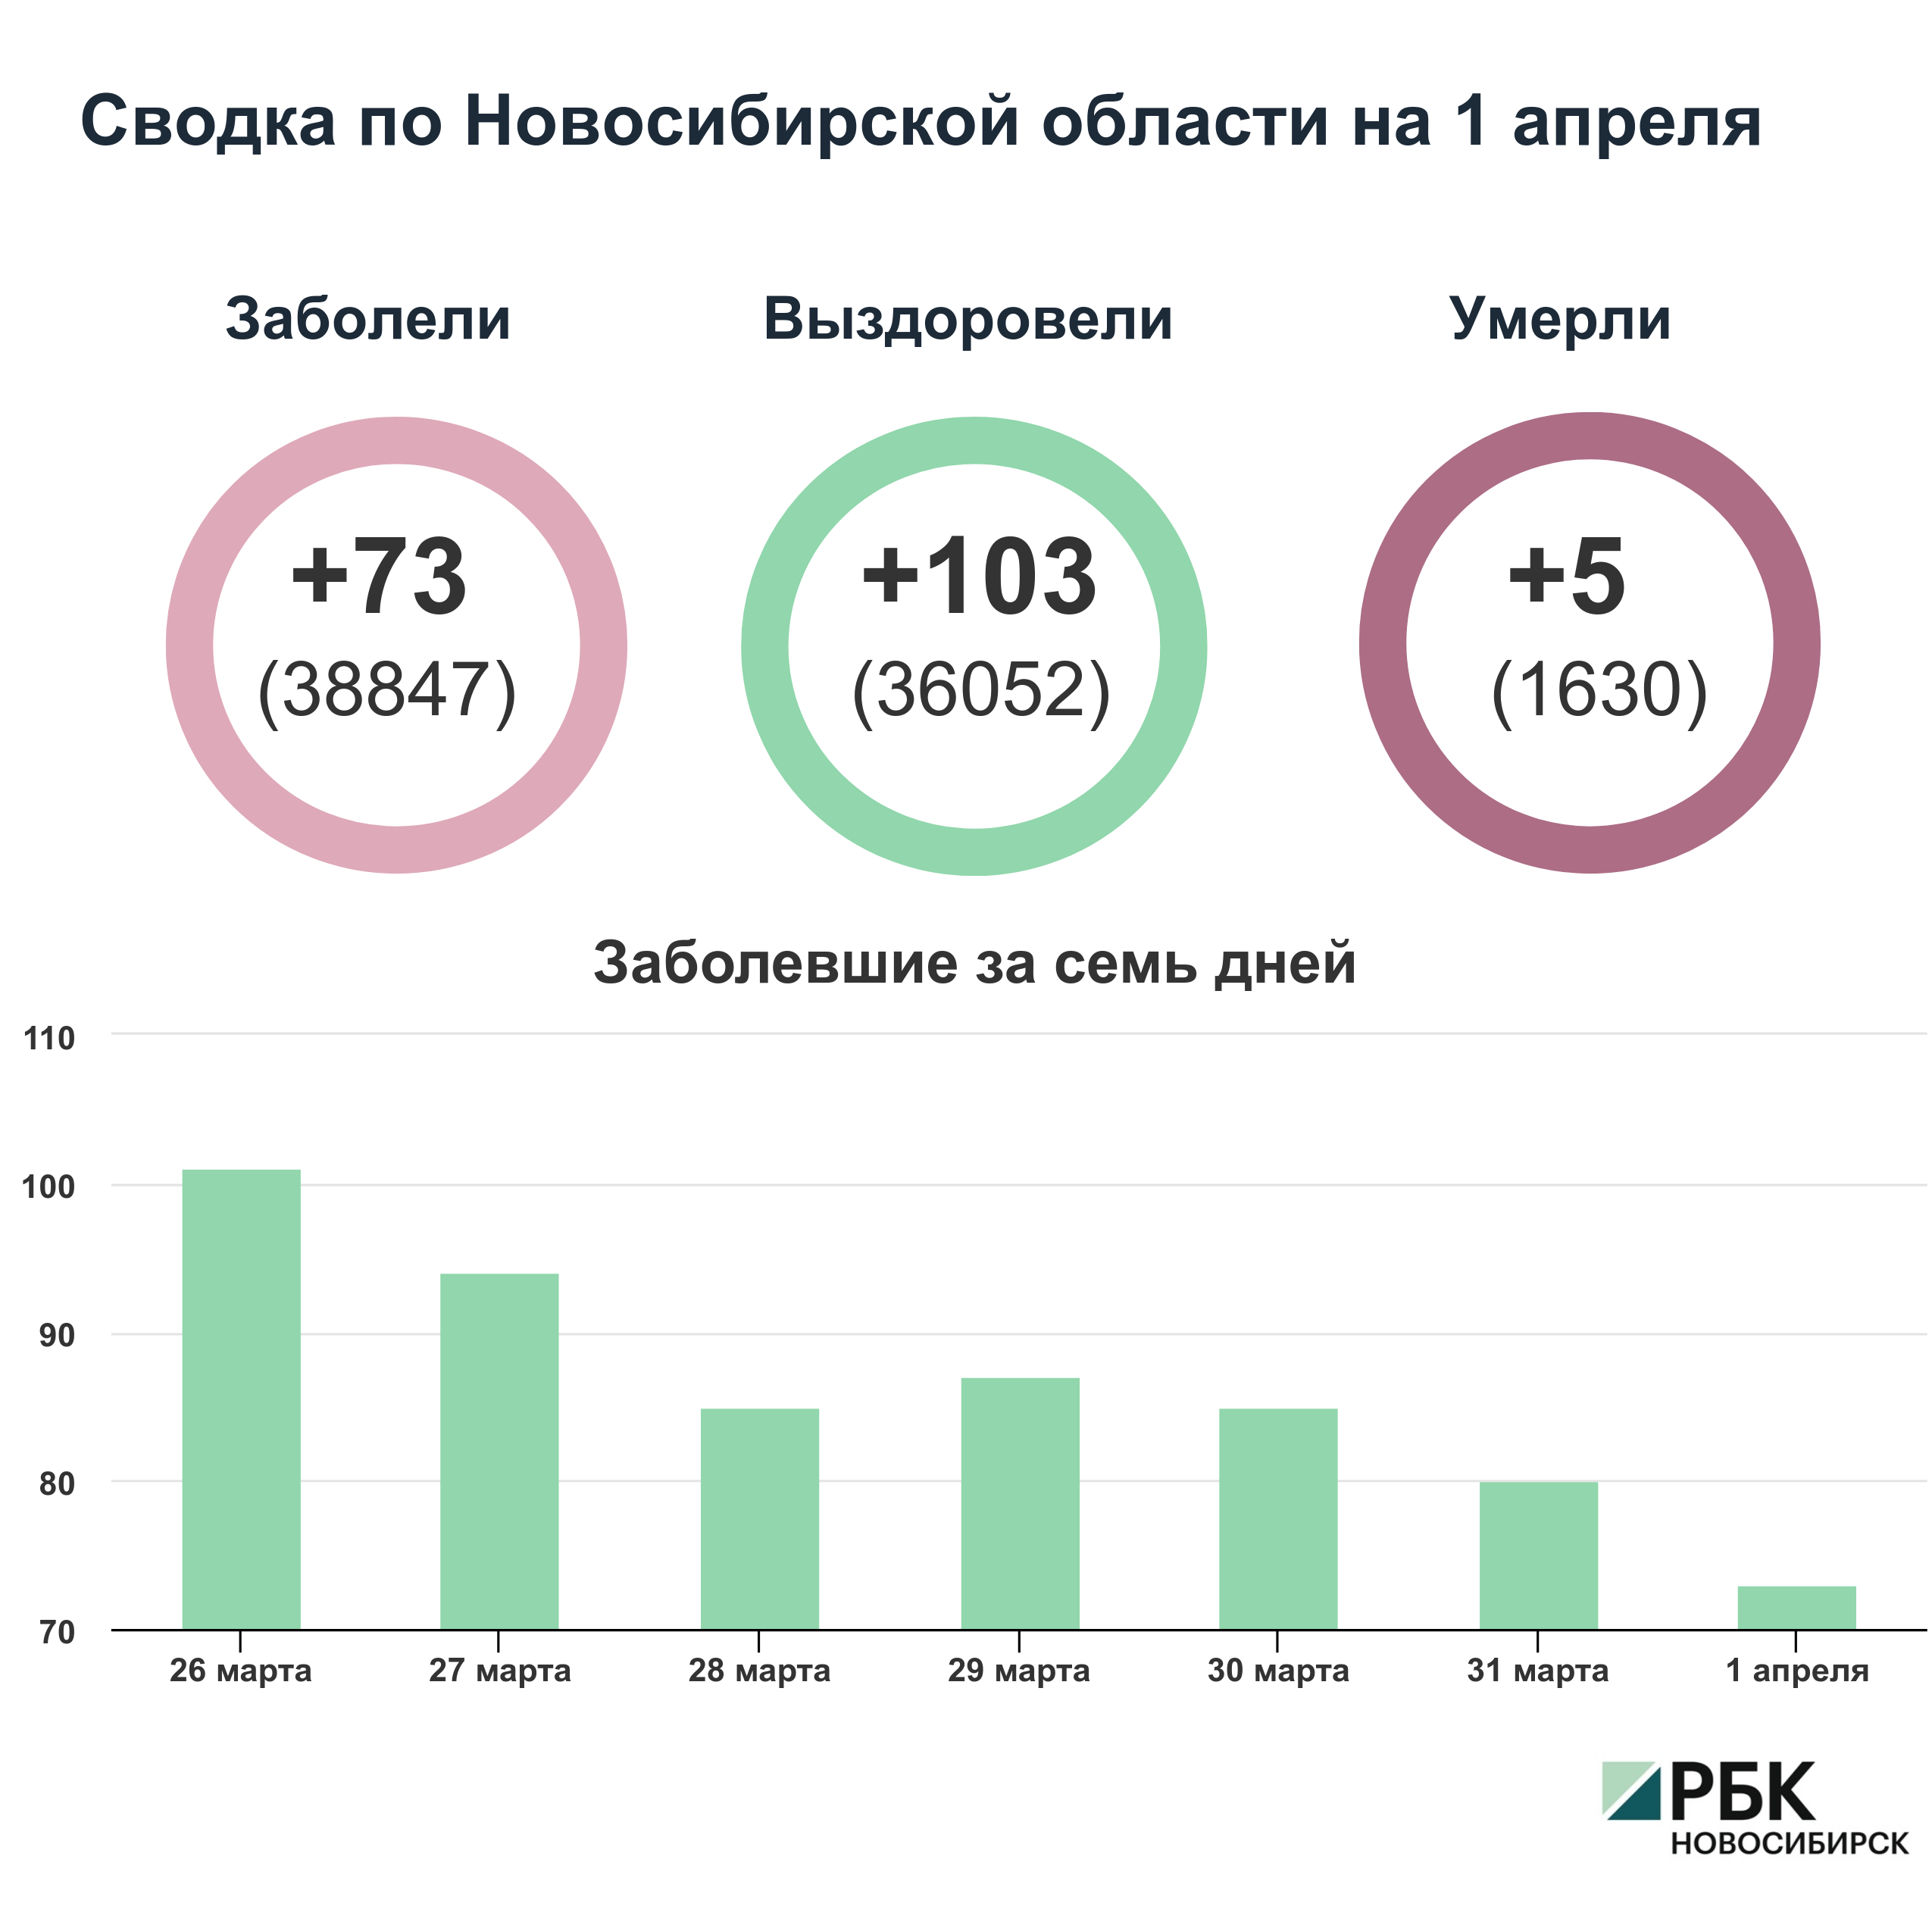 Коронавирус в Новосибирске: сводка на 1 апреля